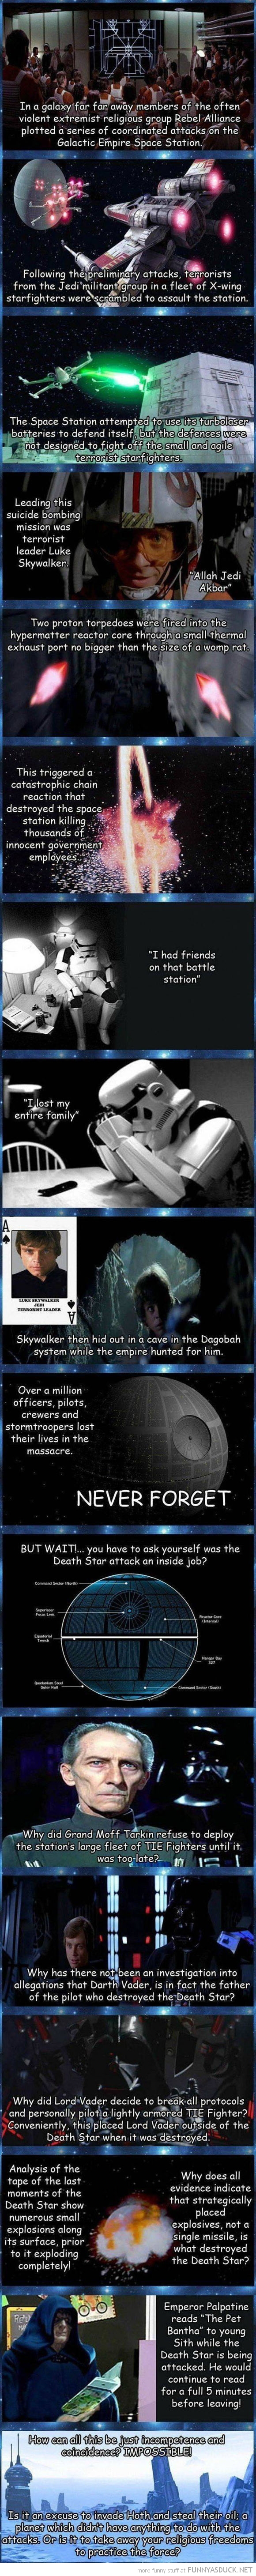 The Death Star Was An Inside Job